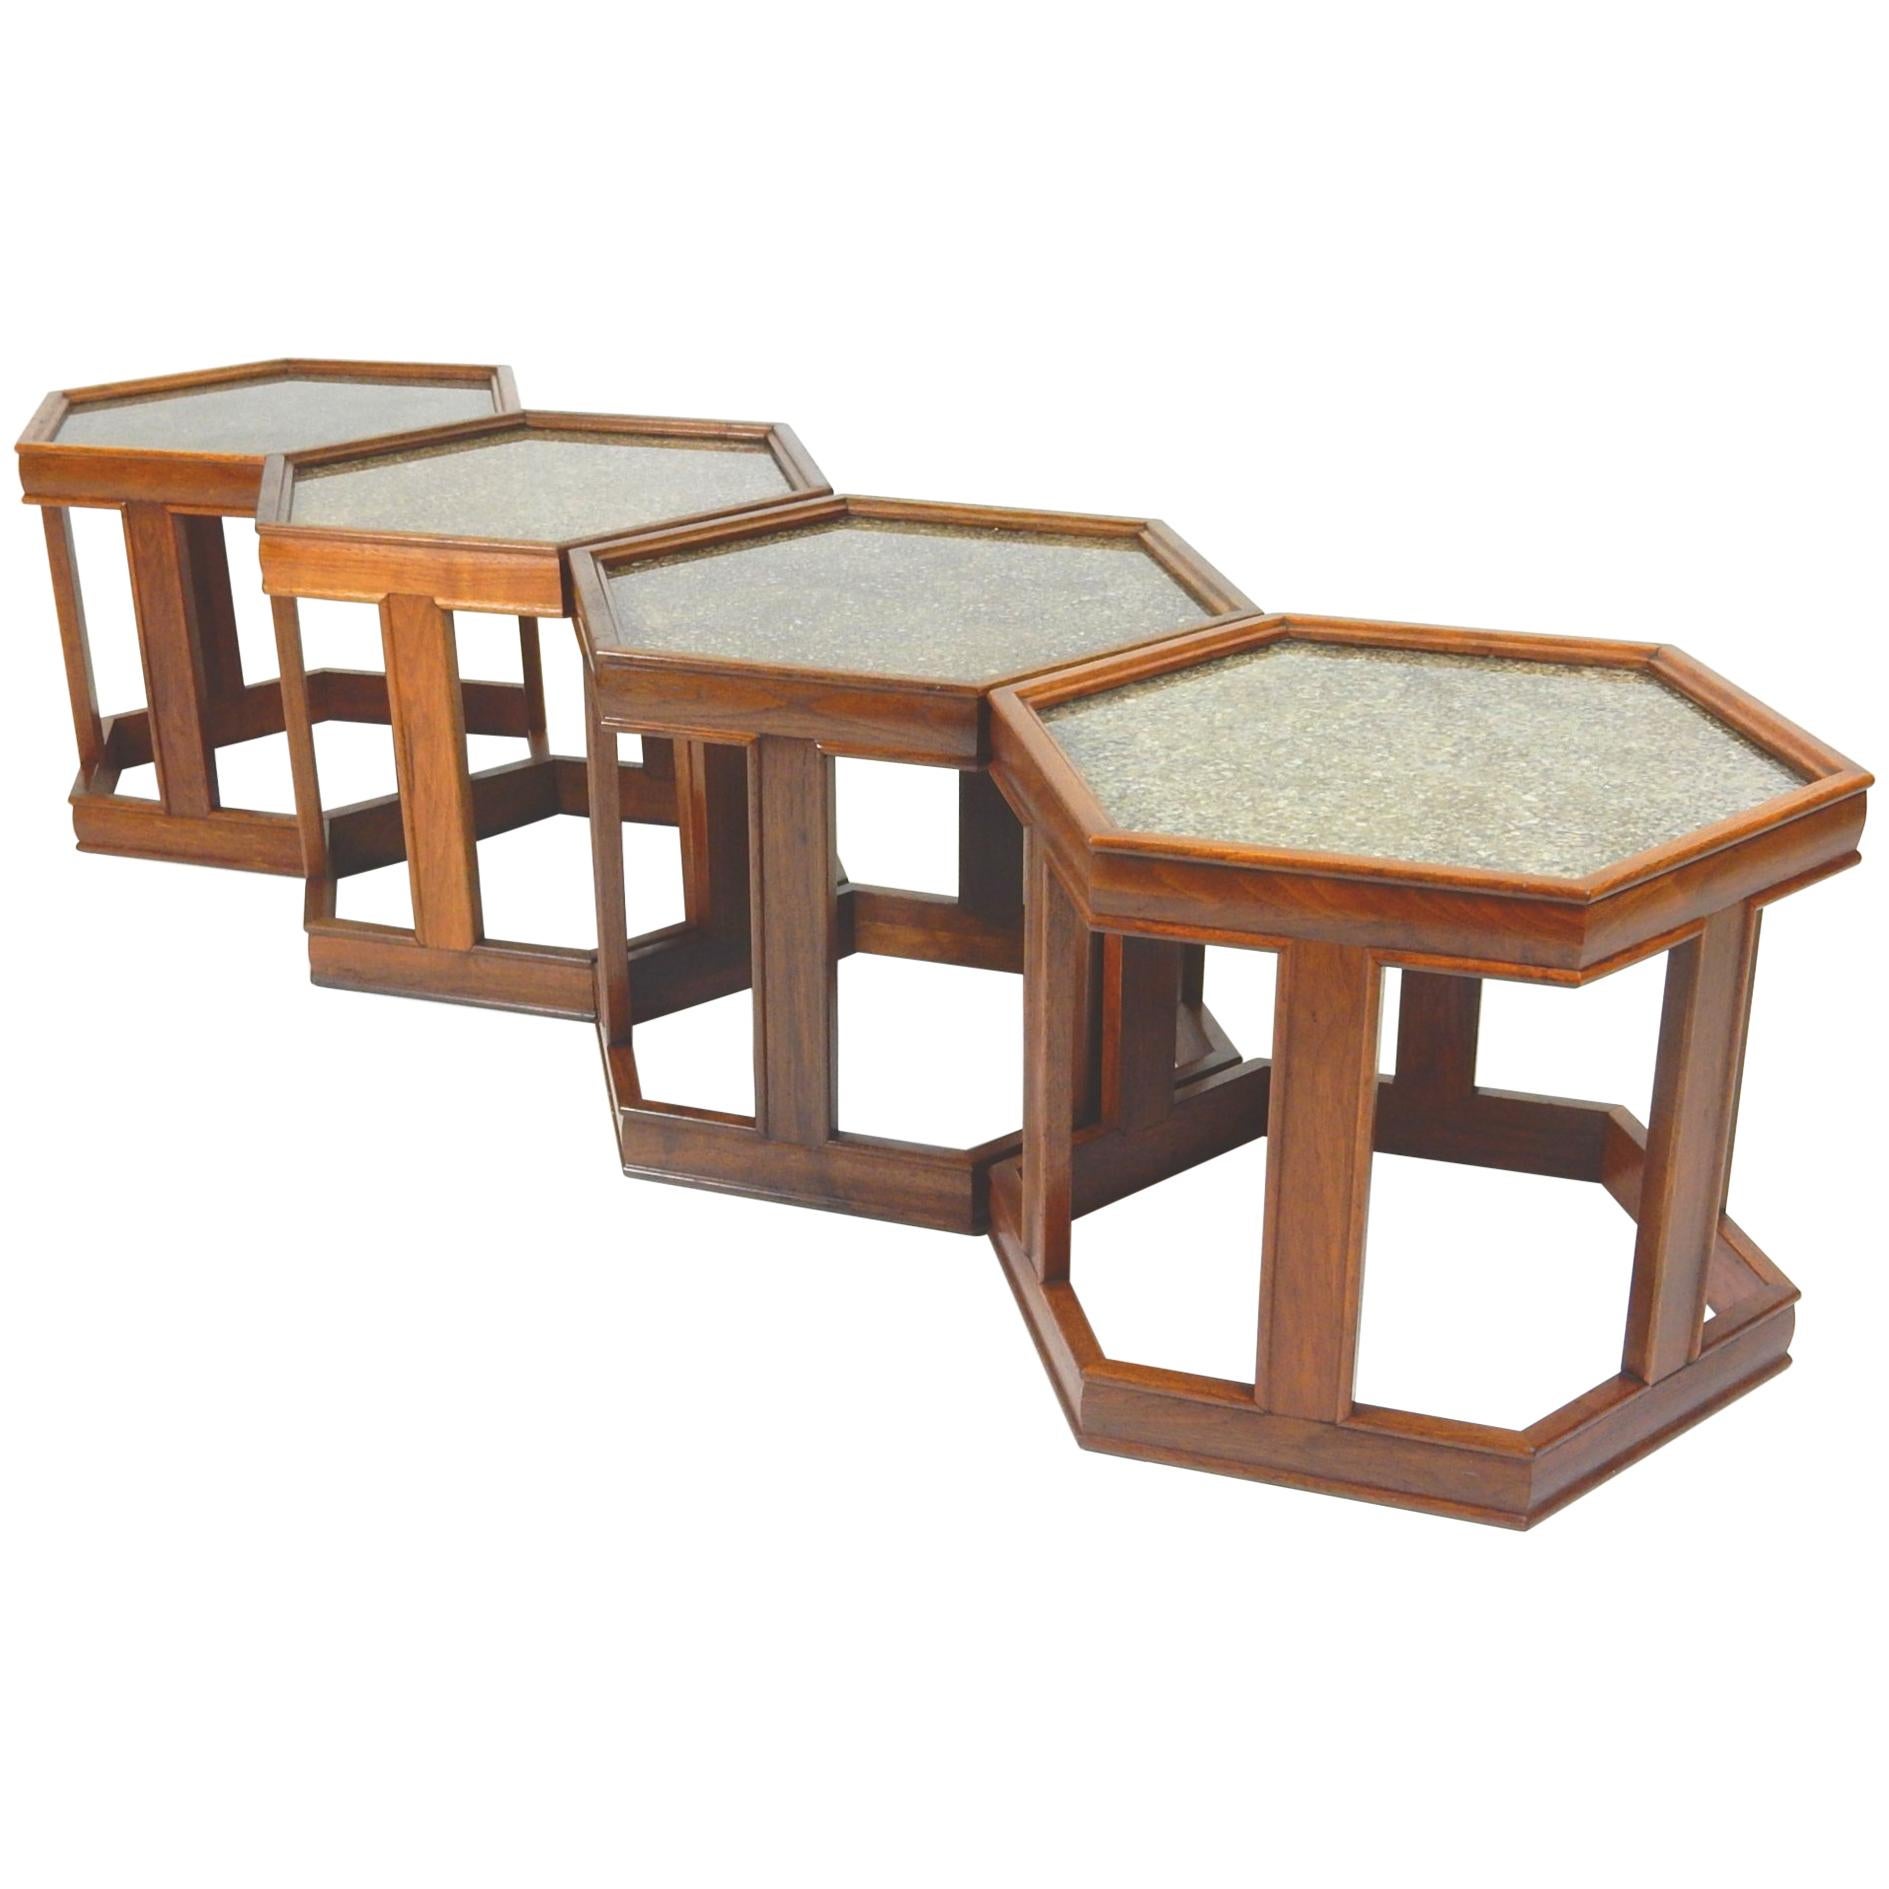 Mid-Century Modern John Keal for Brown Saltman Hexagon Occasional Table Set